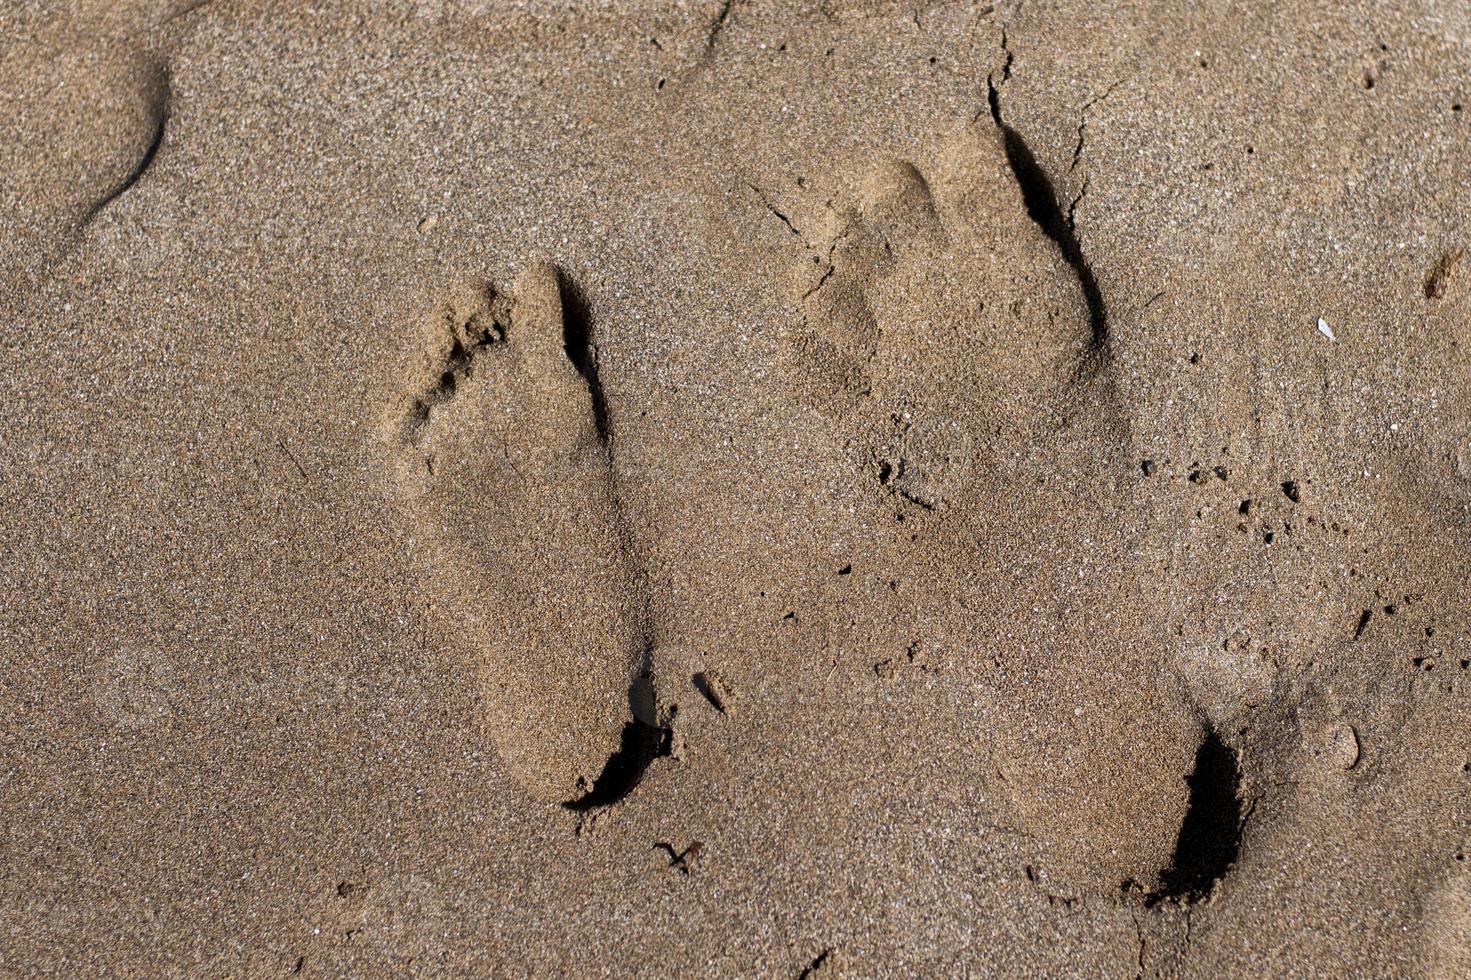 Human tracks on sand photo